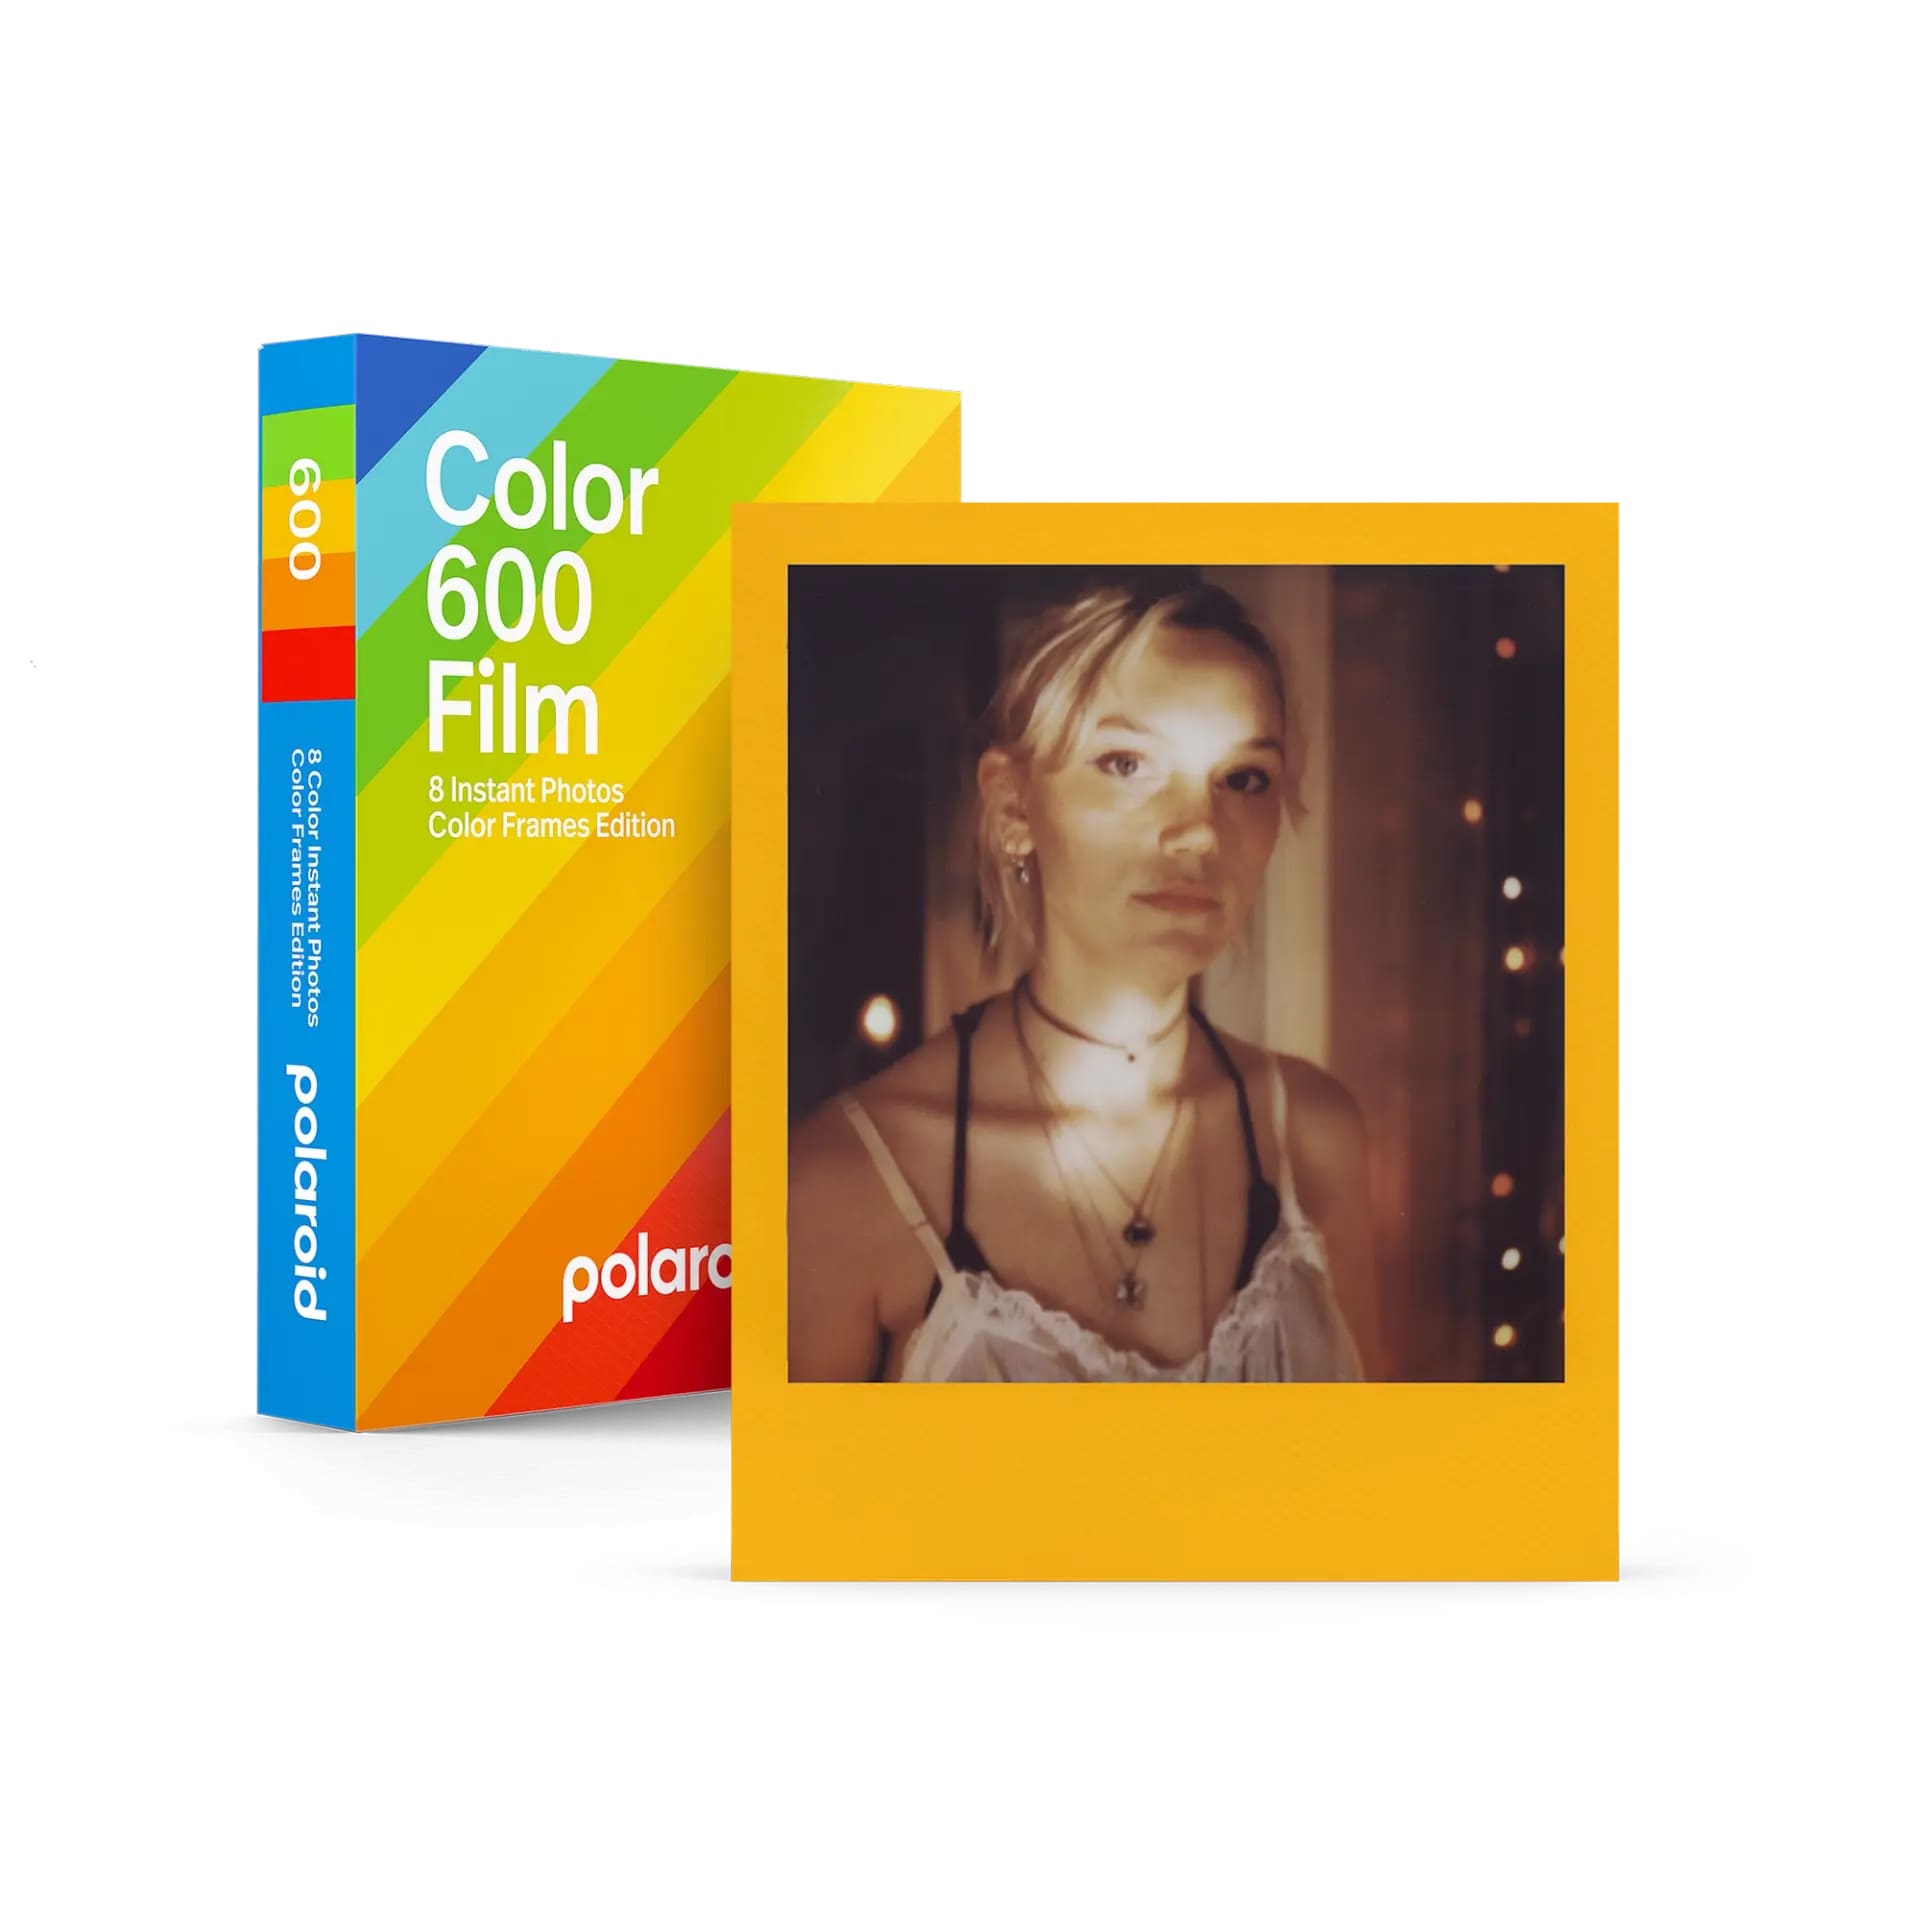 Polaroid Originals 600 Color Color Frame